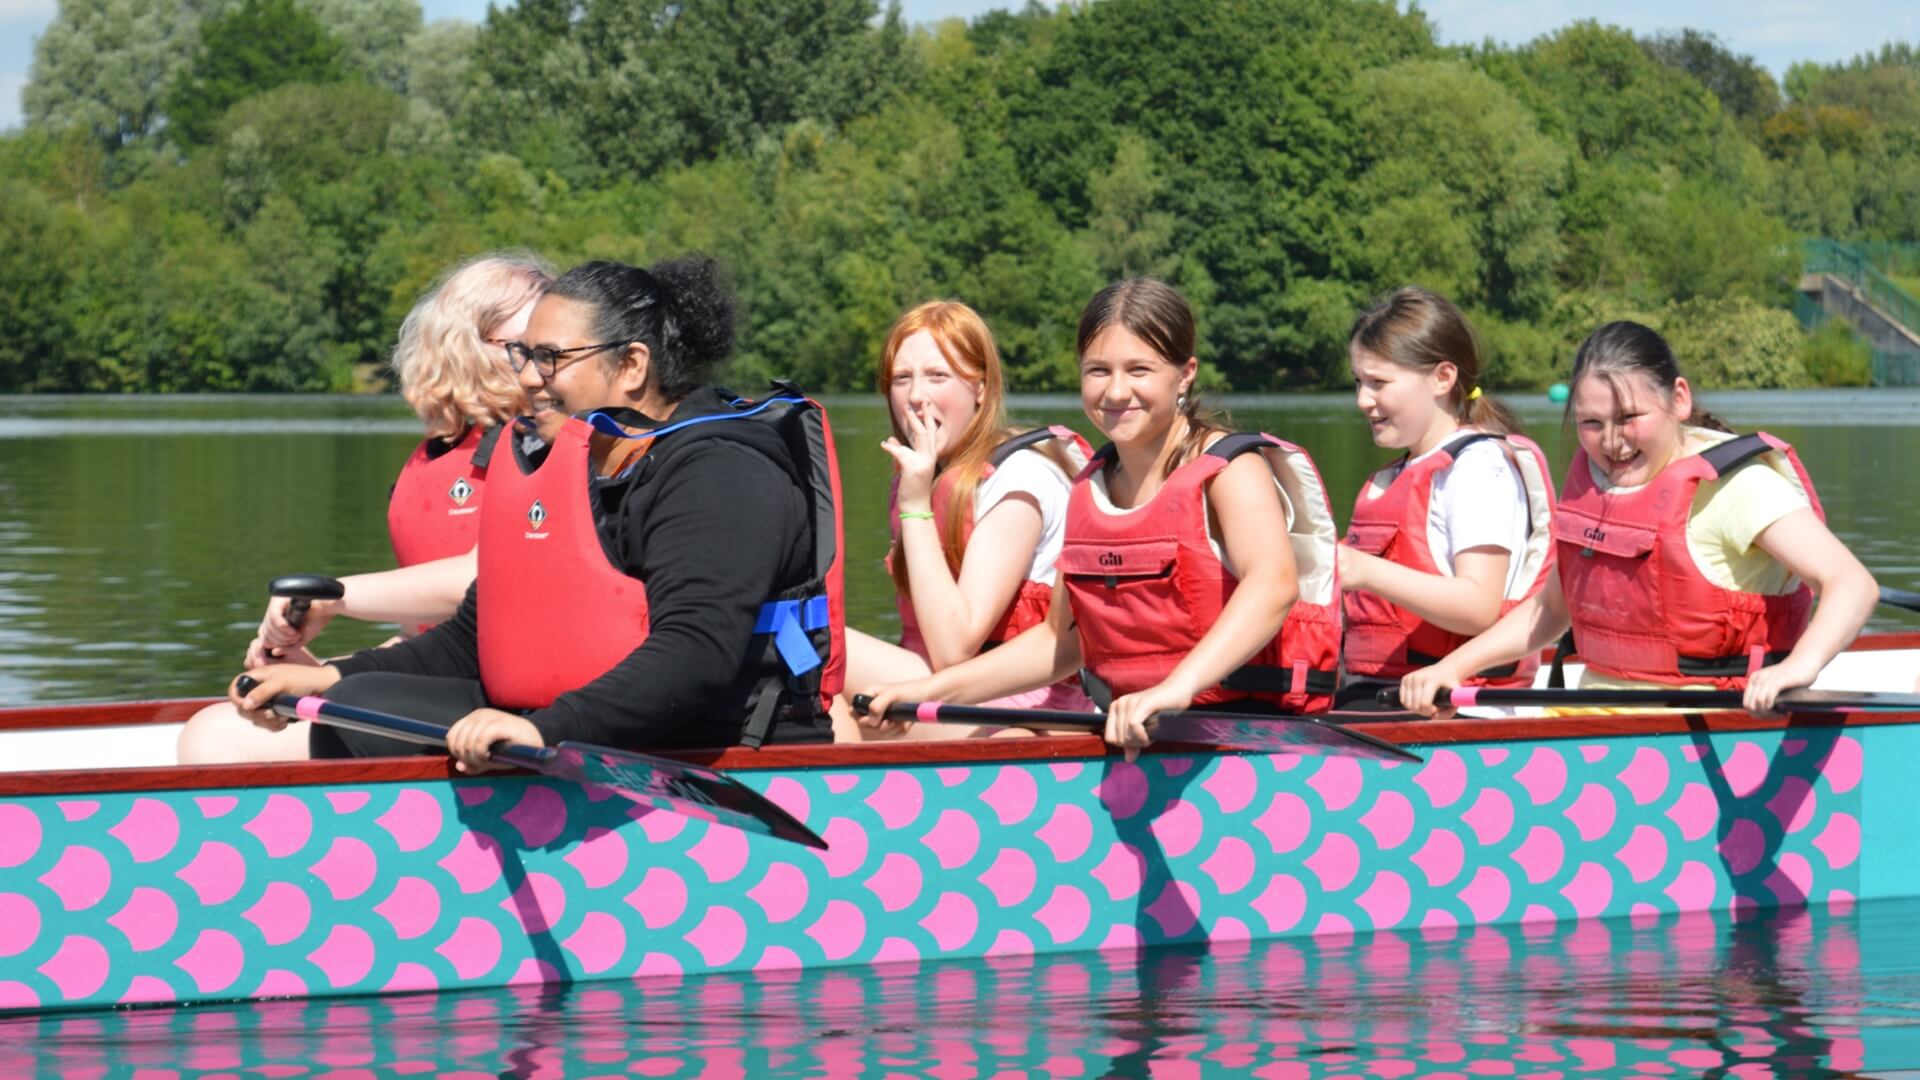 Members rowing on a lake